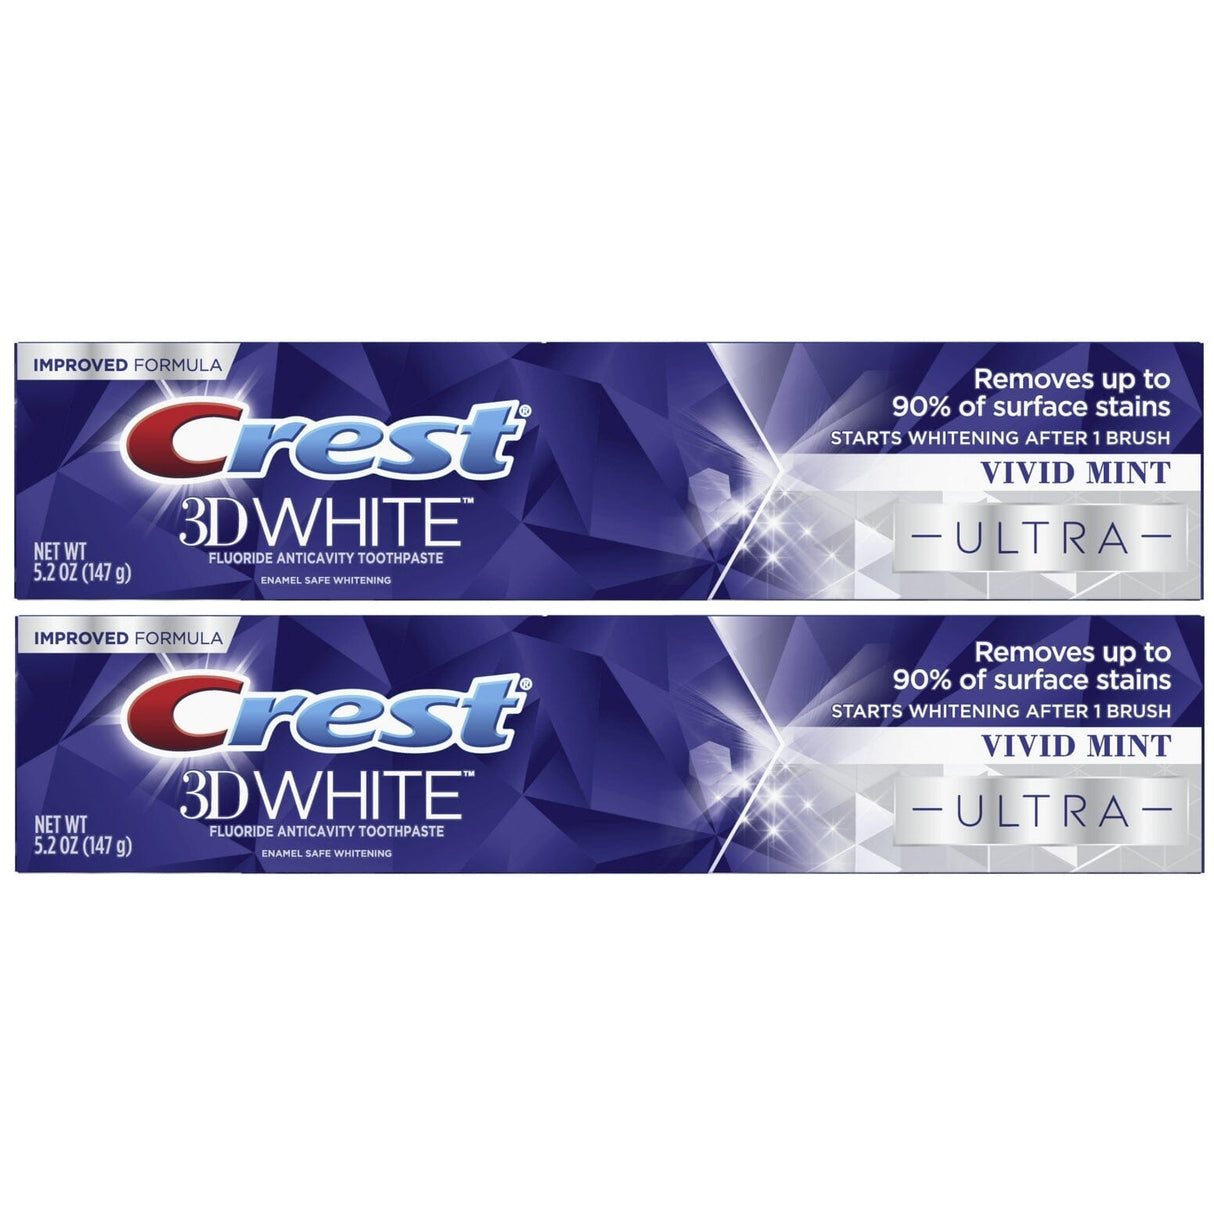 Crest 3D White Professional Toothpaste 85g Crest 